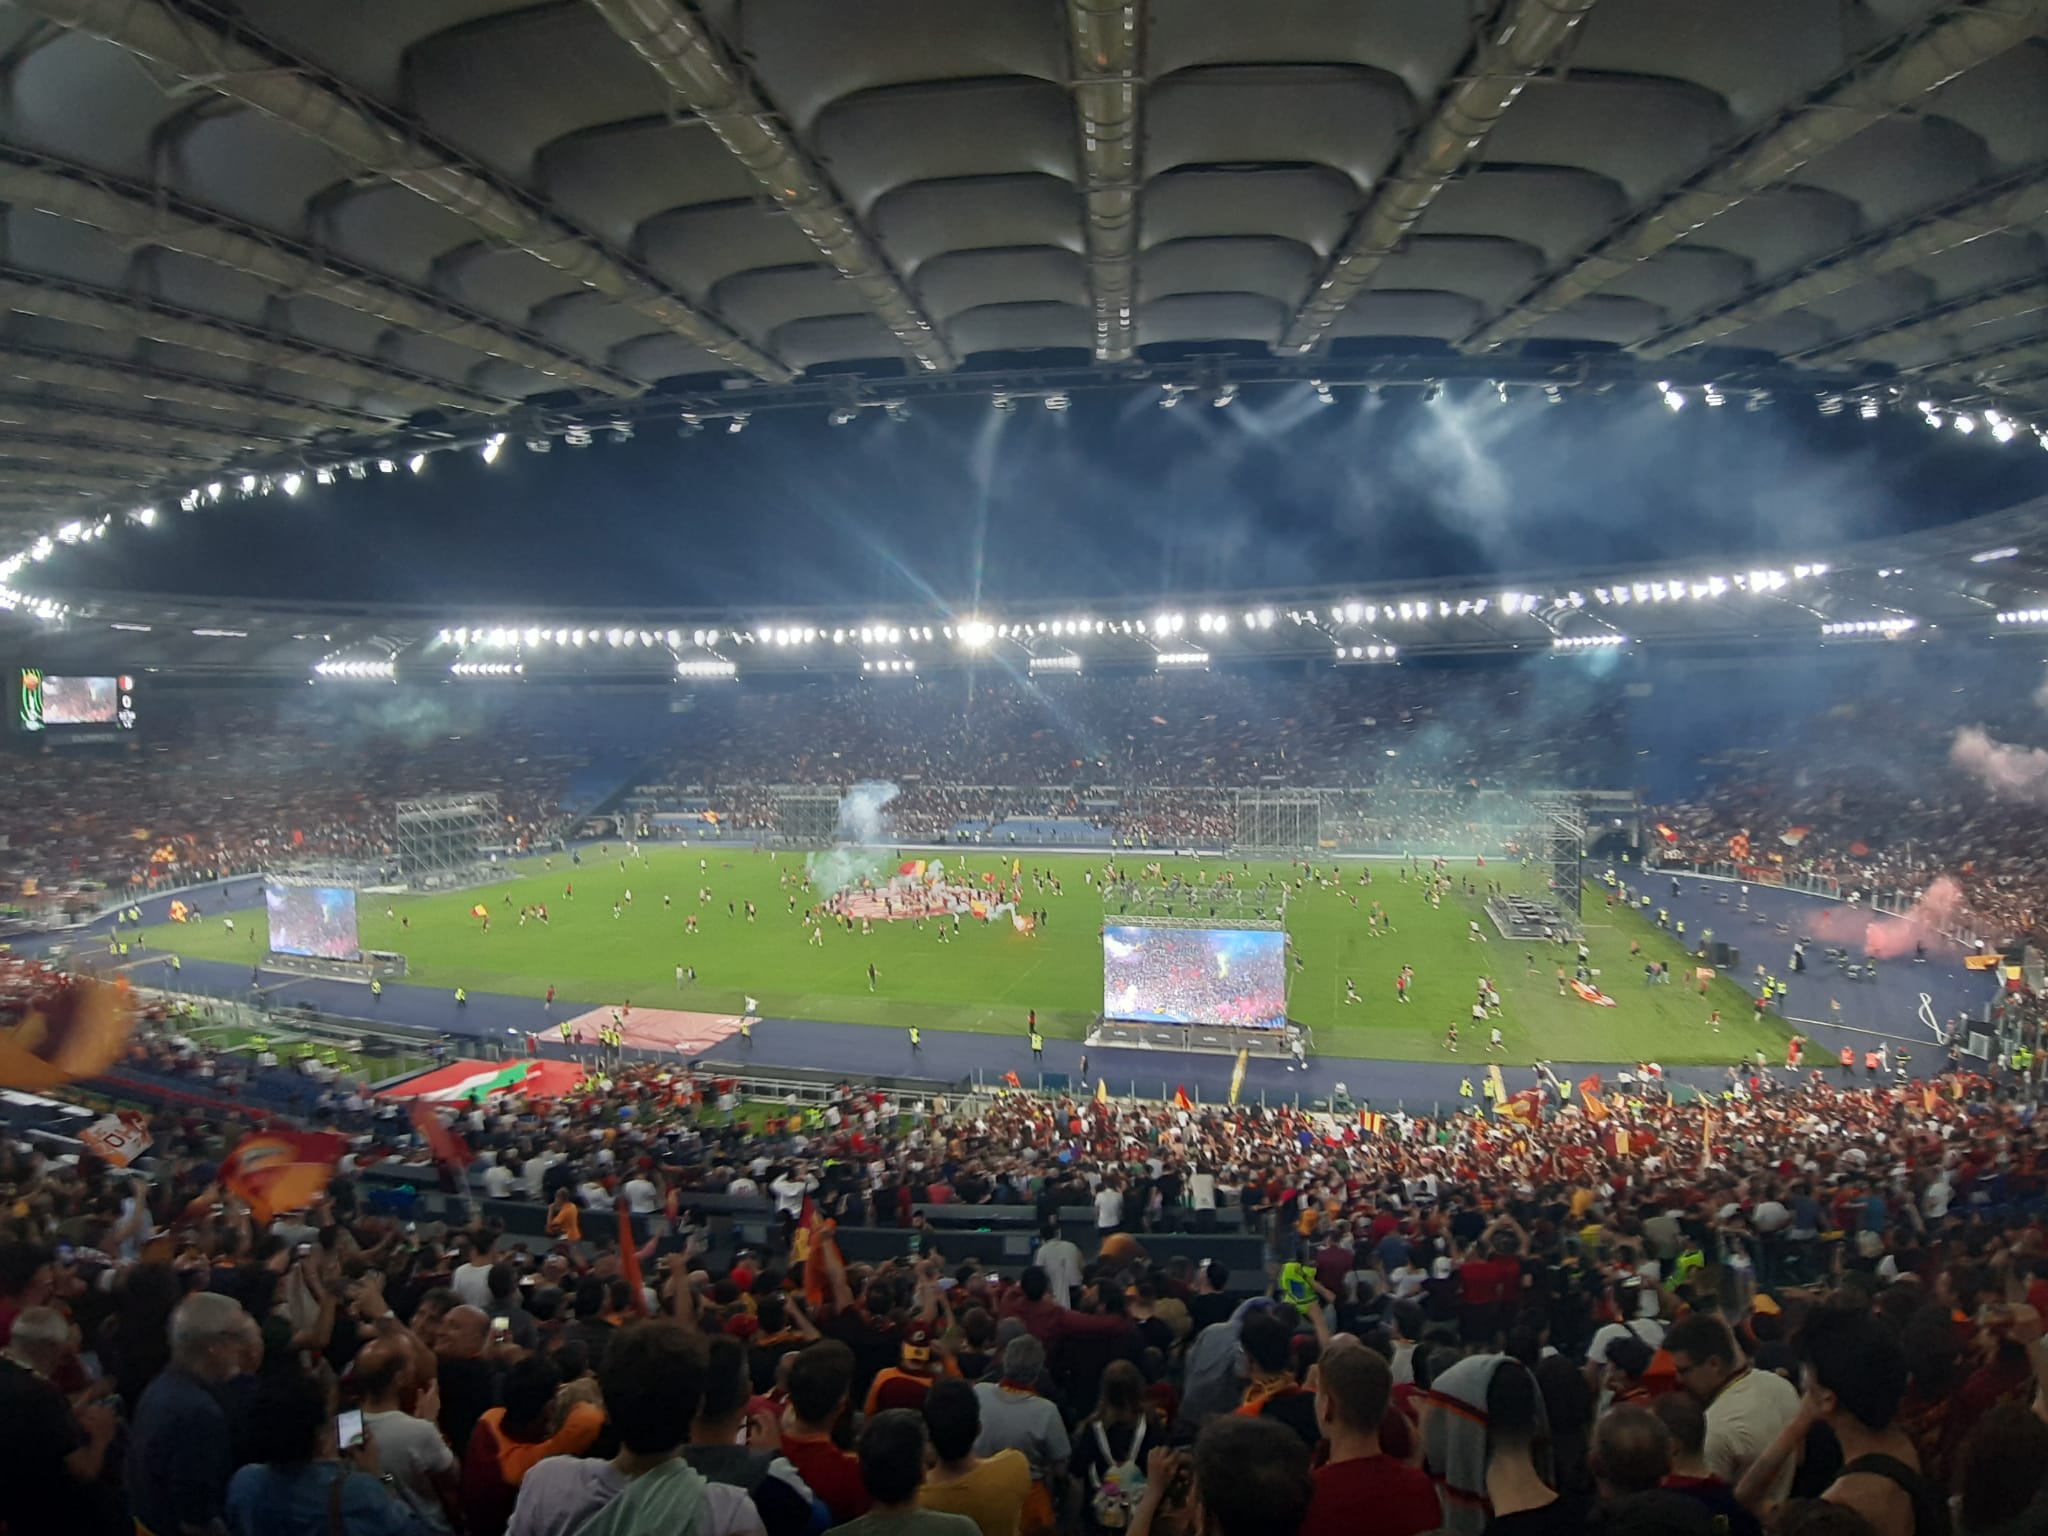 Stadio olimpico, oggi il derby roma lazio